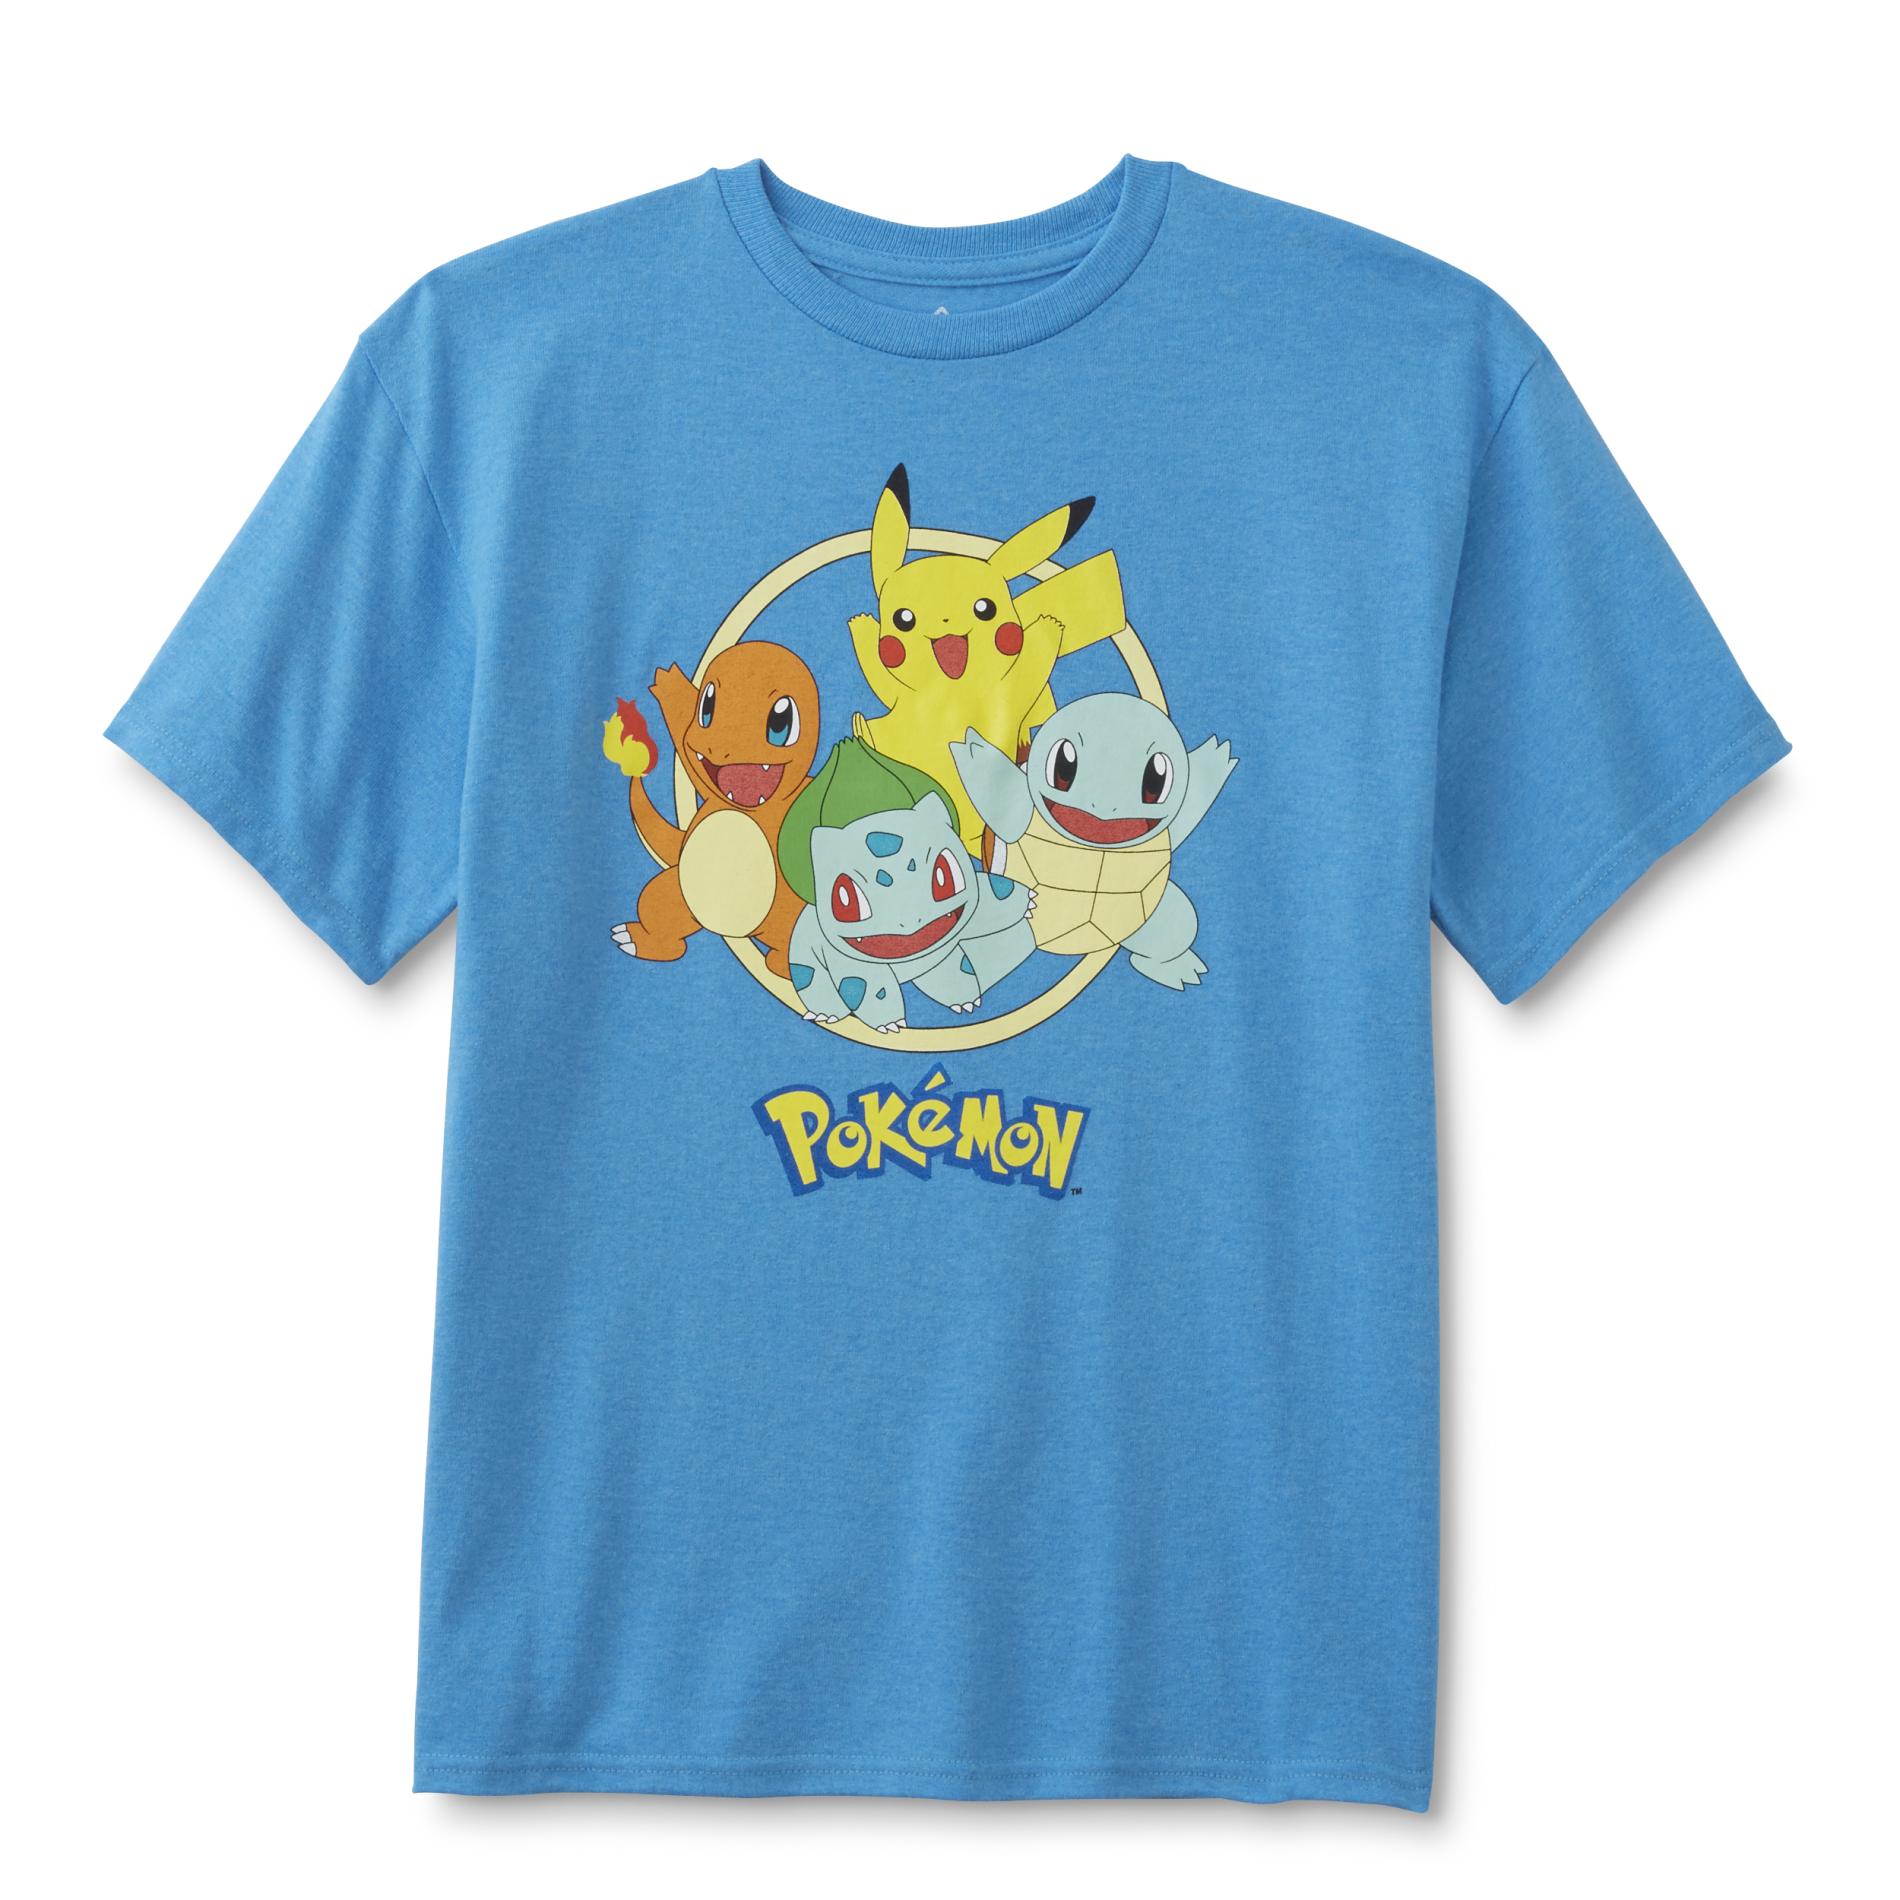 Nintendo Pokemon Boy's Graphic T-Shirt